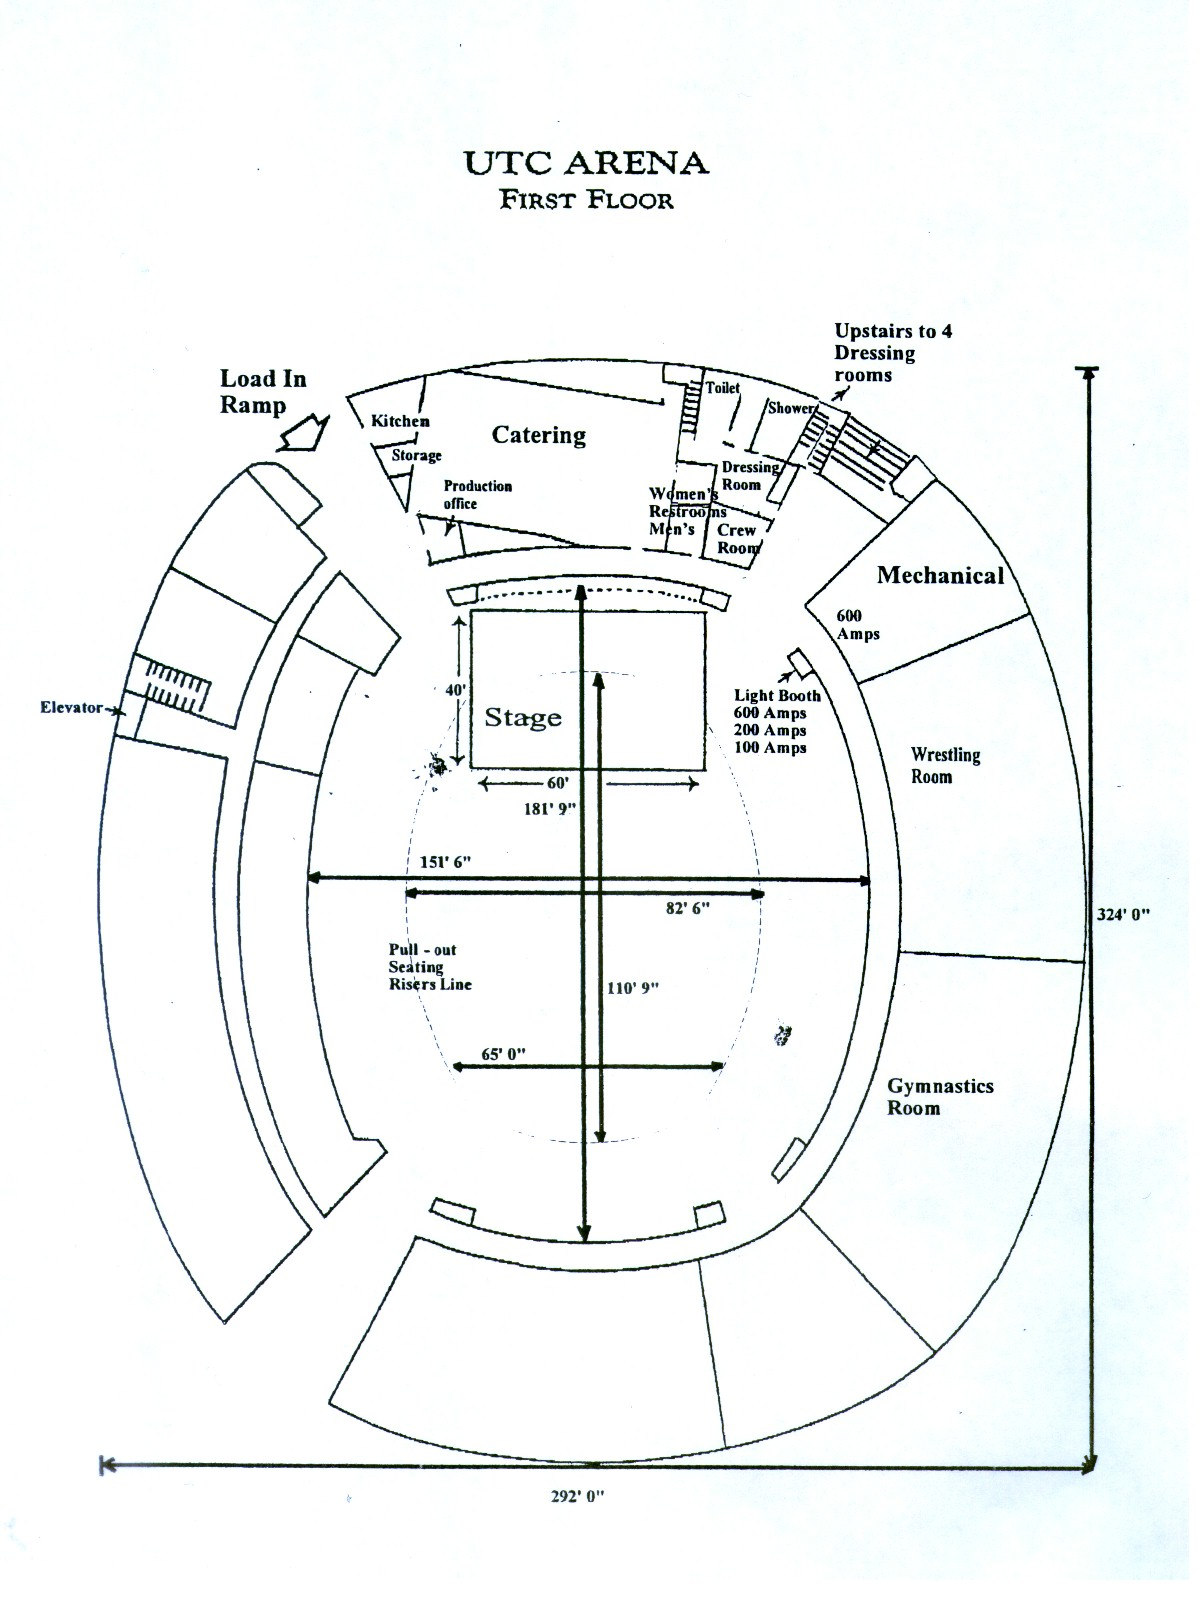 UTC Arena first floor plan